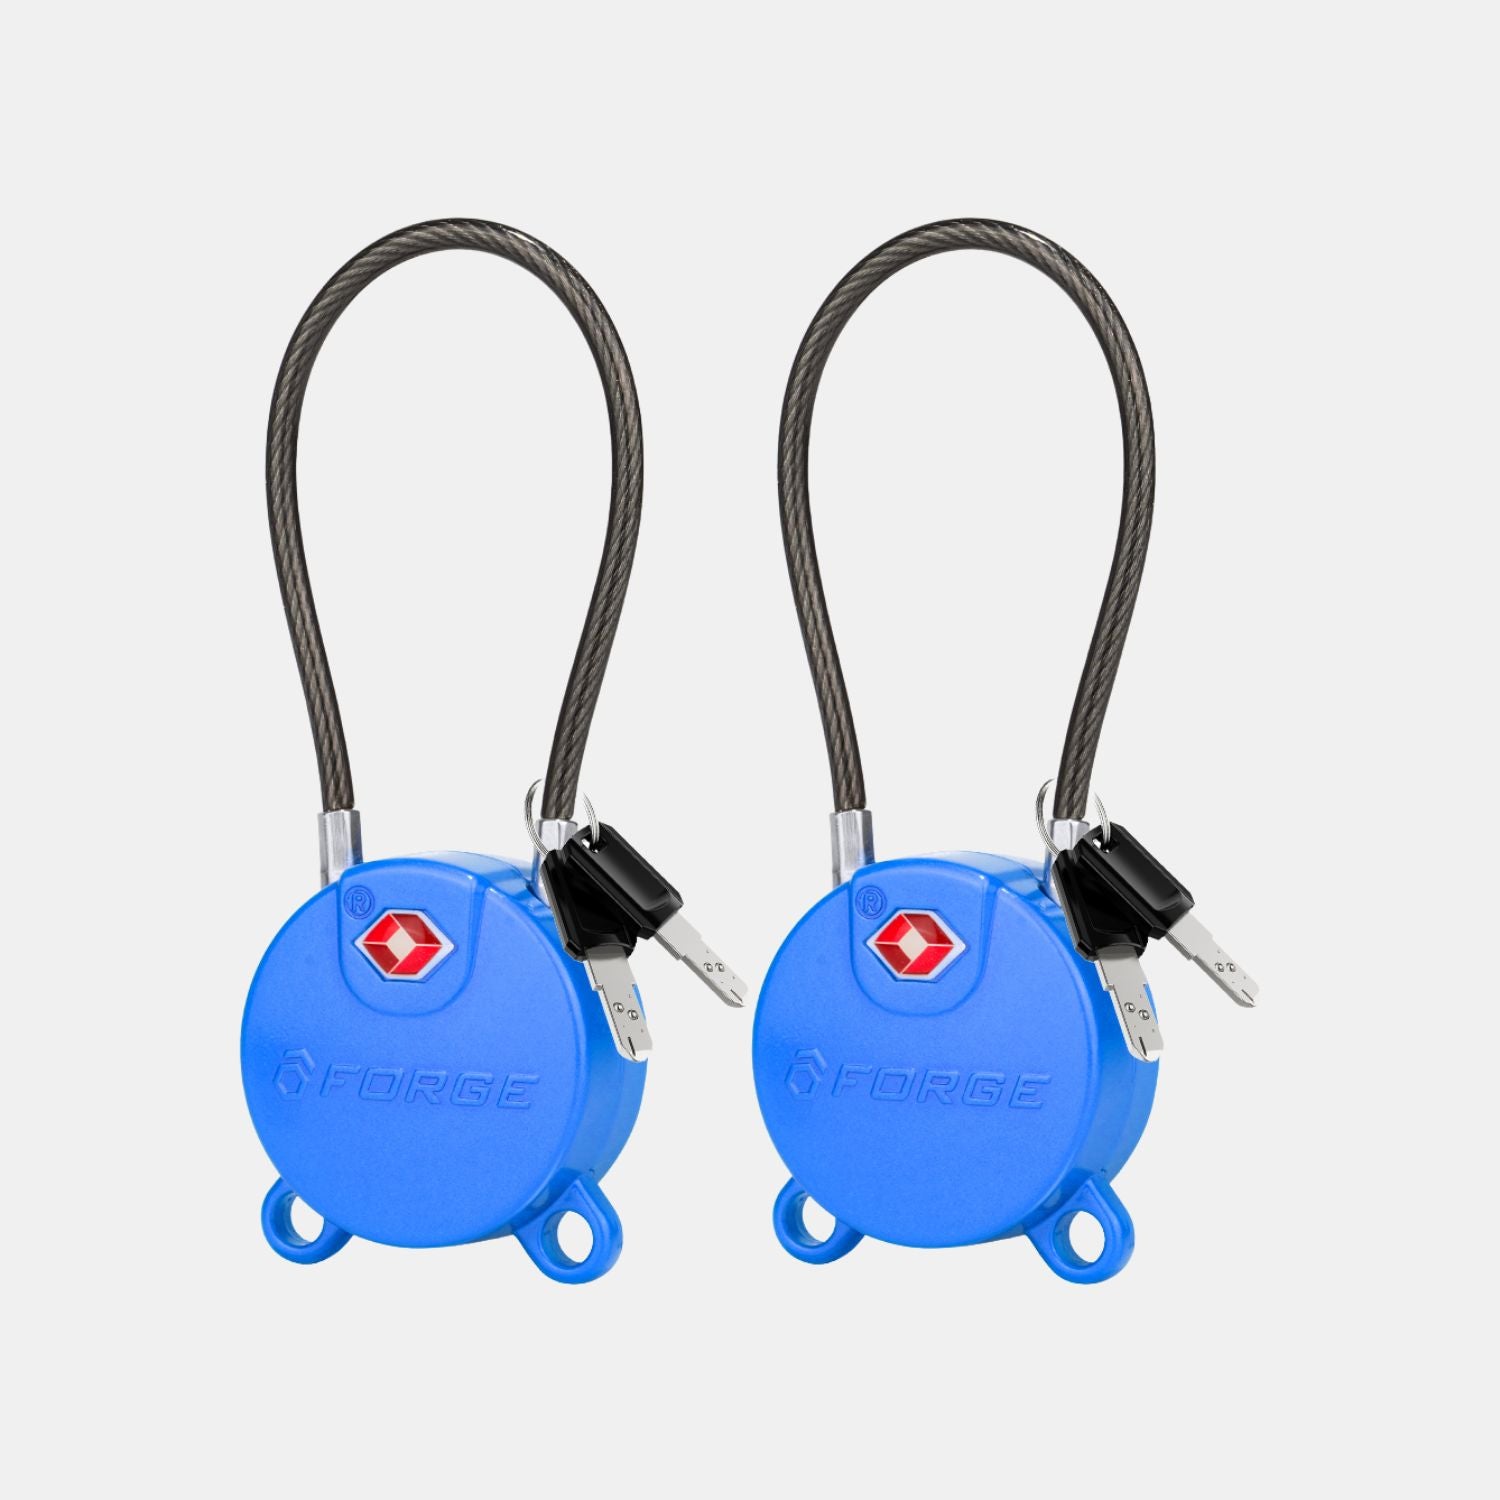 TSA Approved Luggage Locks, Ultra-Secure Dimple Key Travel Locks,TSA006 Key, Blue 2 Locks